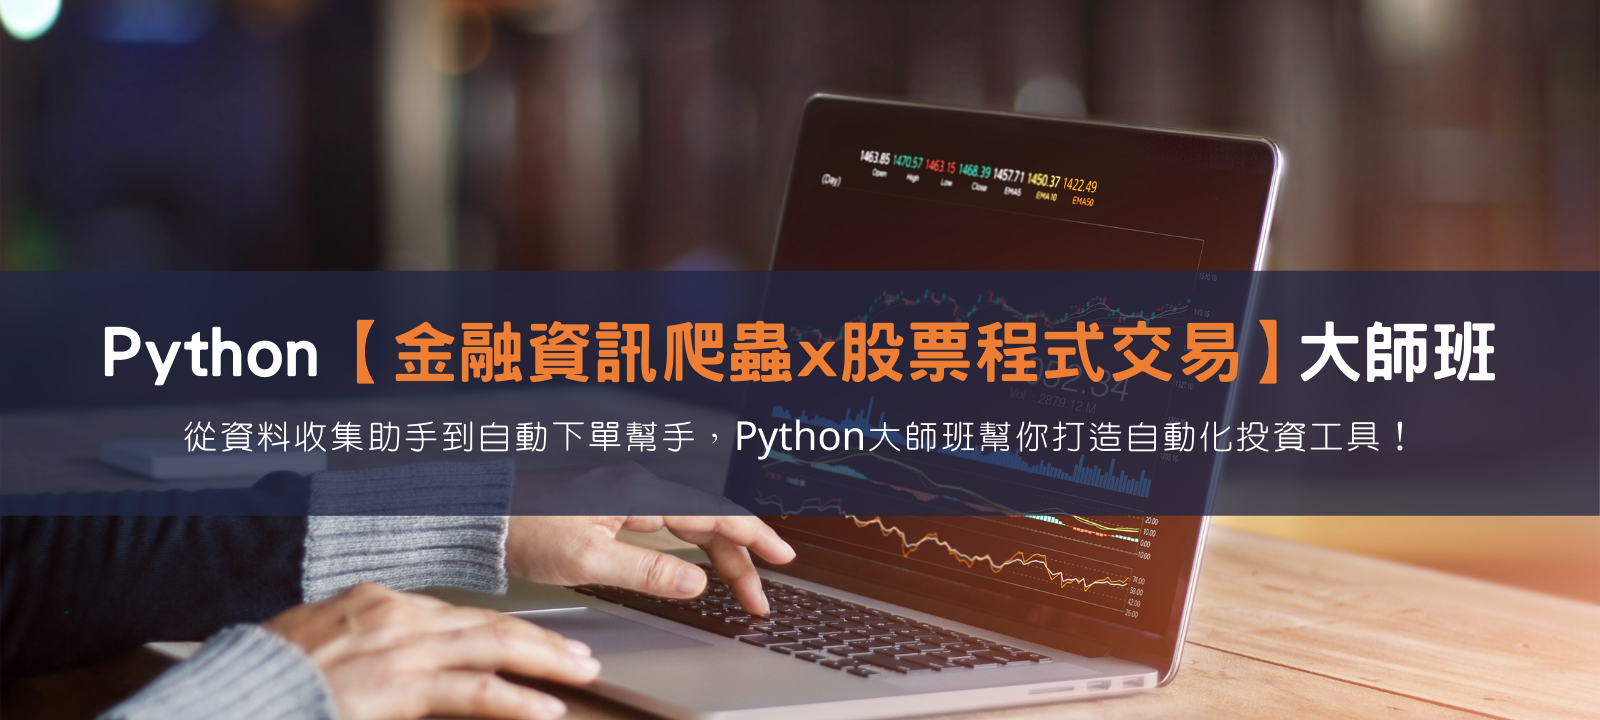 Python 金融資訊爬蟲 x 股票程式交易 大師班